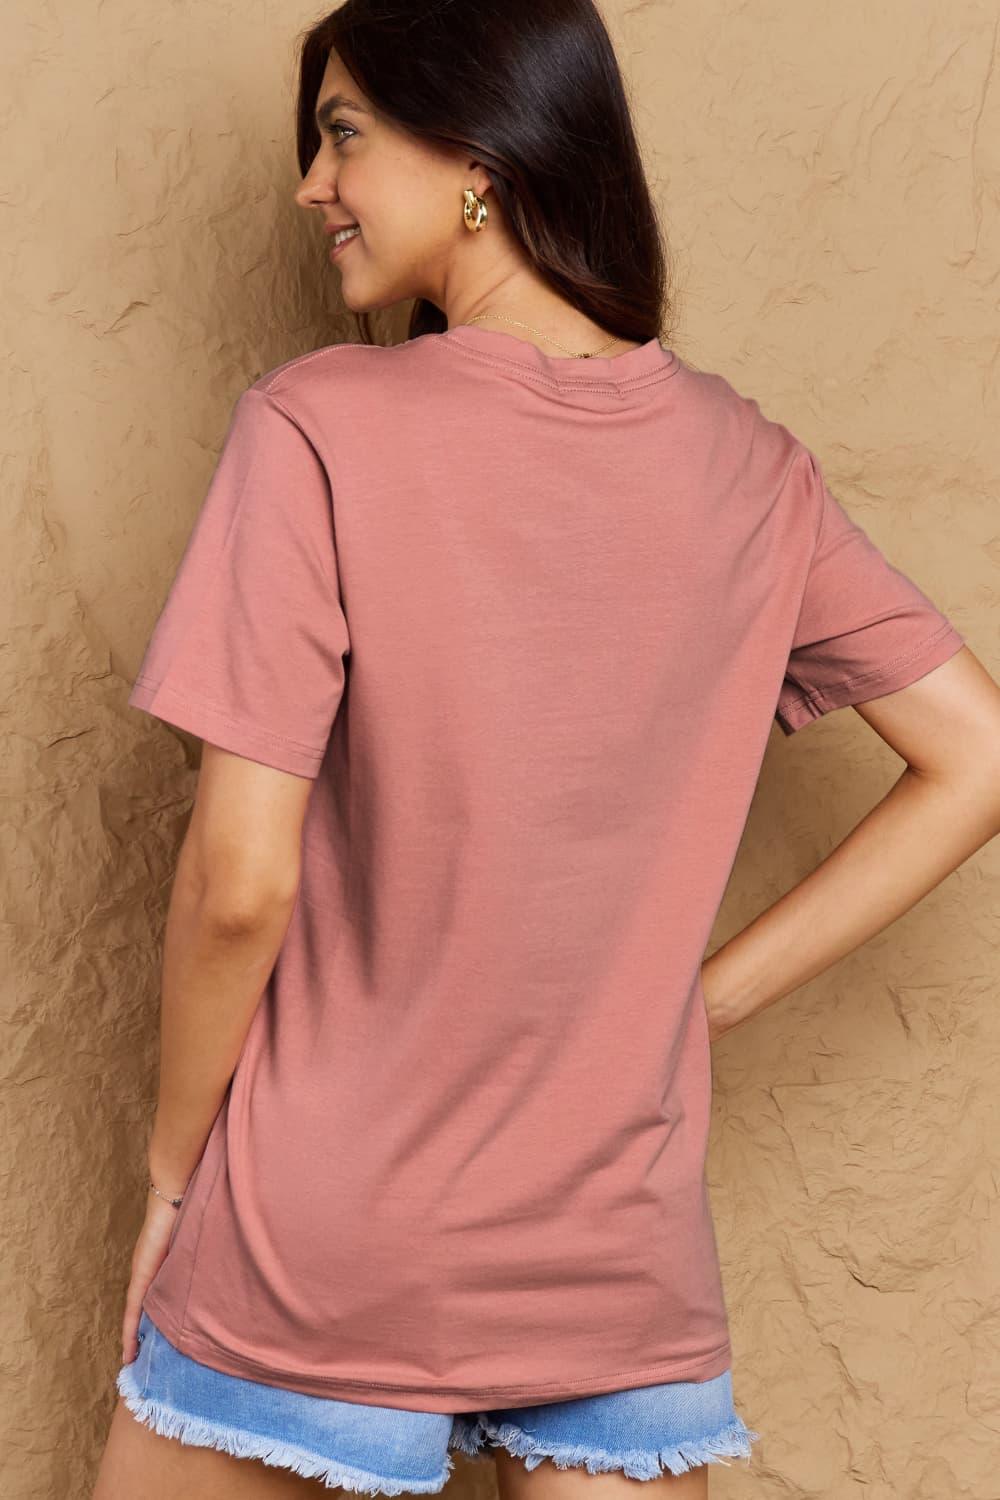 Simply Love Full Size BOO Graphic Cotton T-Shirt - Vesteeto